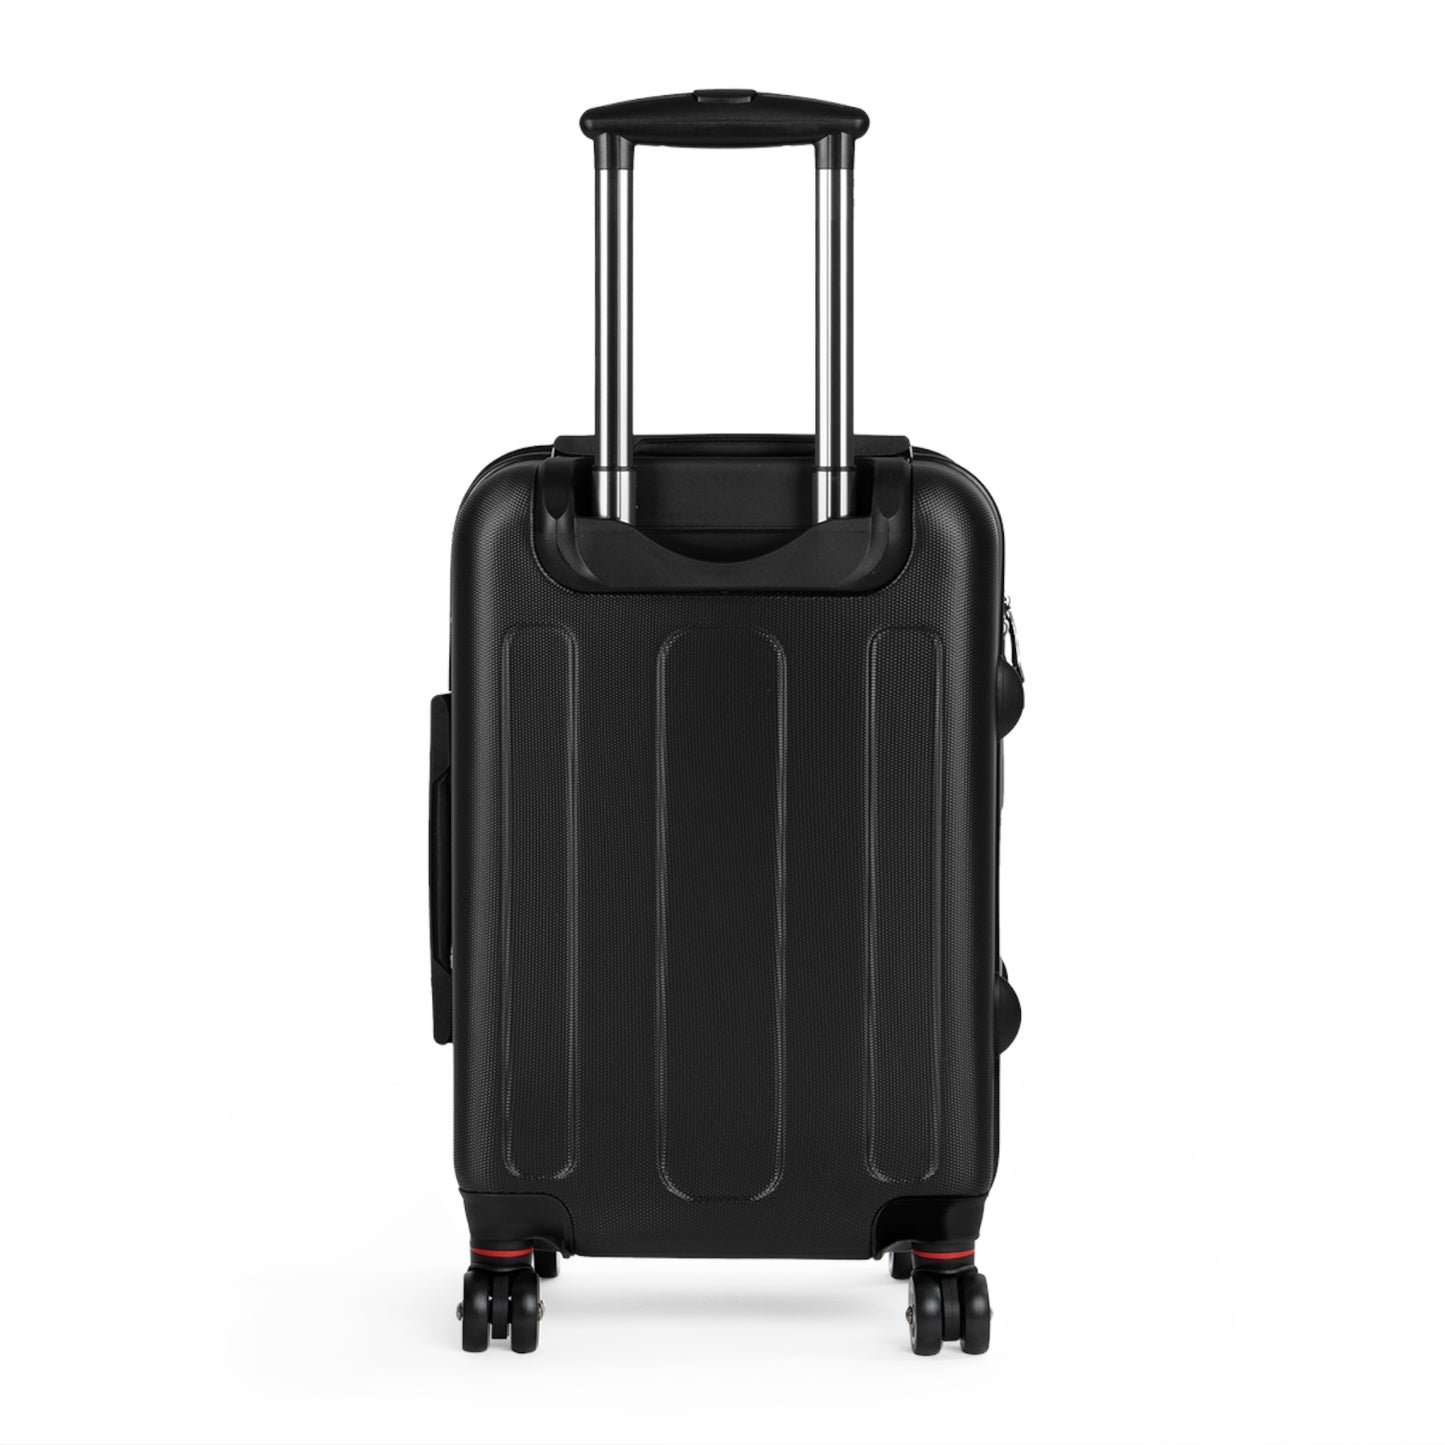 Wanderlust Wagon Luggage | Hippie Trip Collection | Christmas vacation | Travel Luggage | Suitcase | Boho | Retro